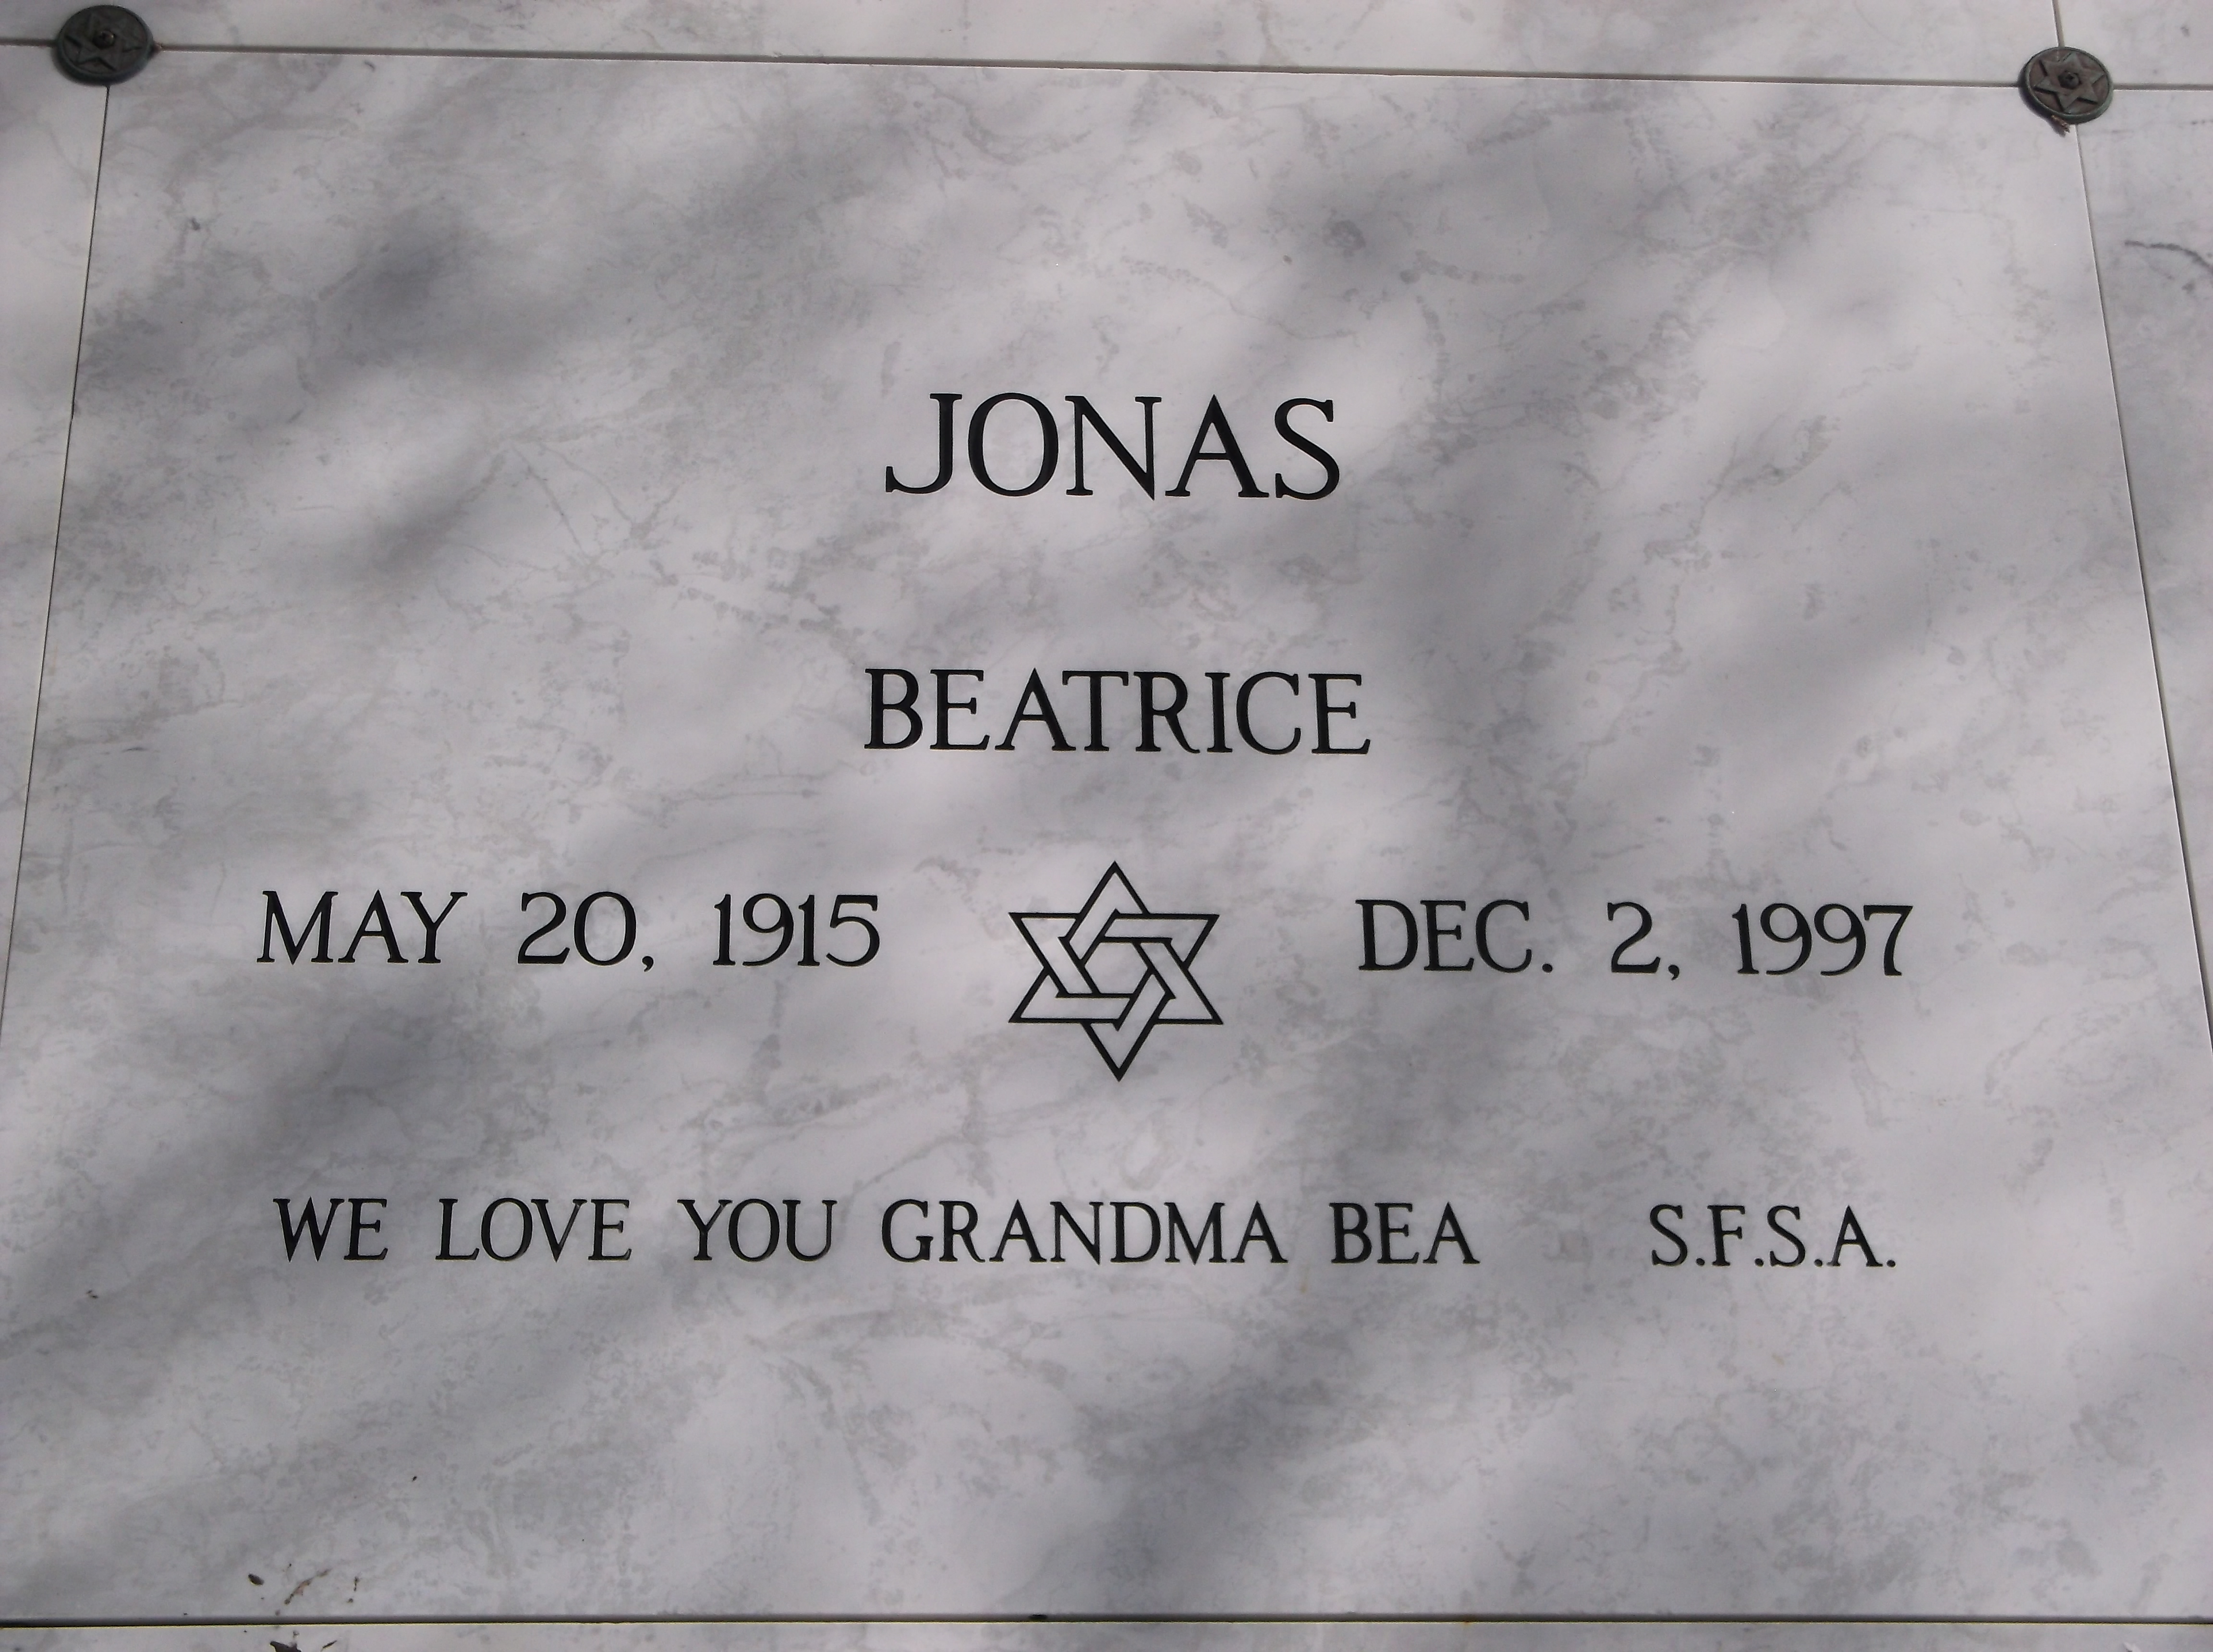 Beatrice "Bea" Jonas